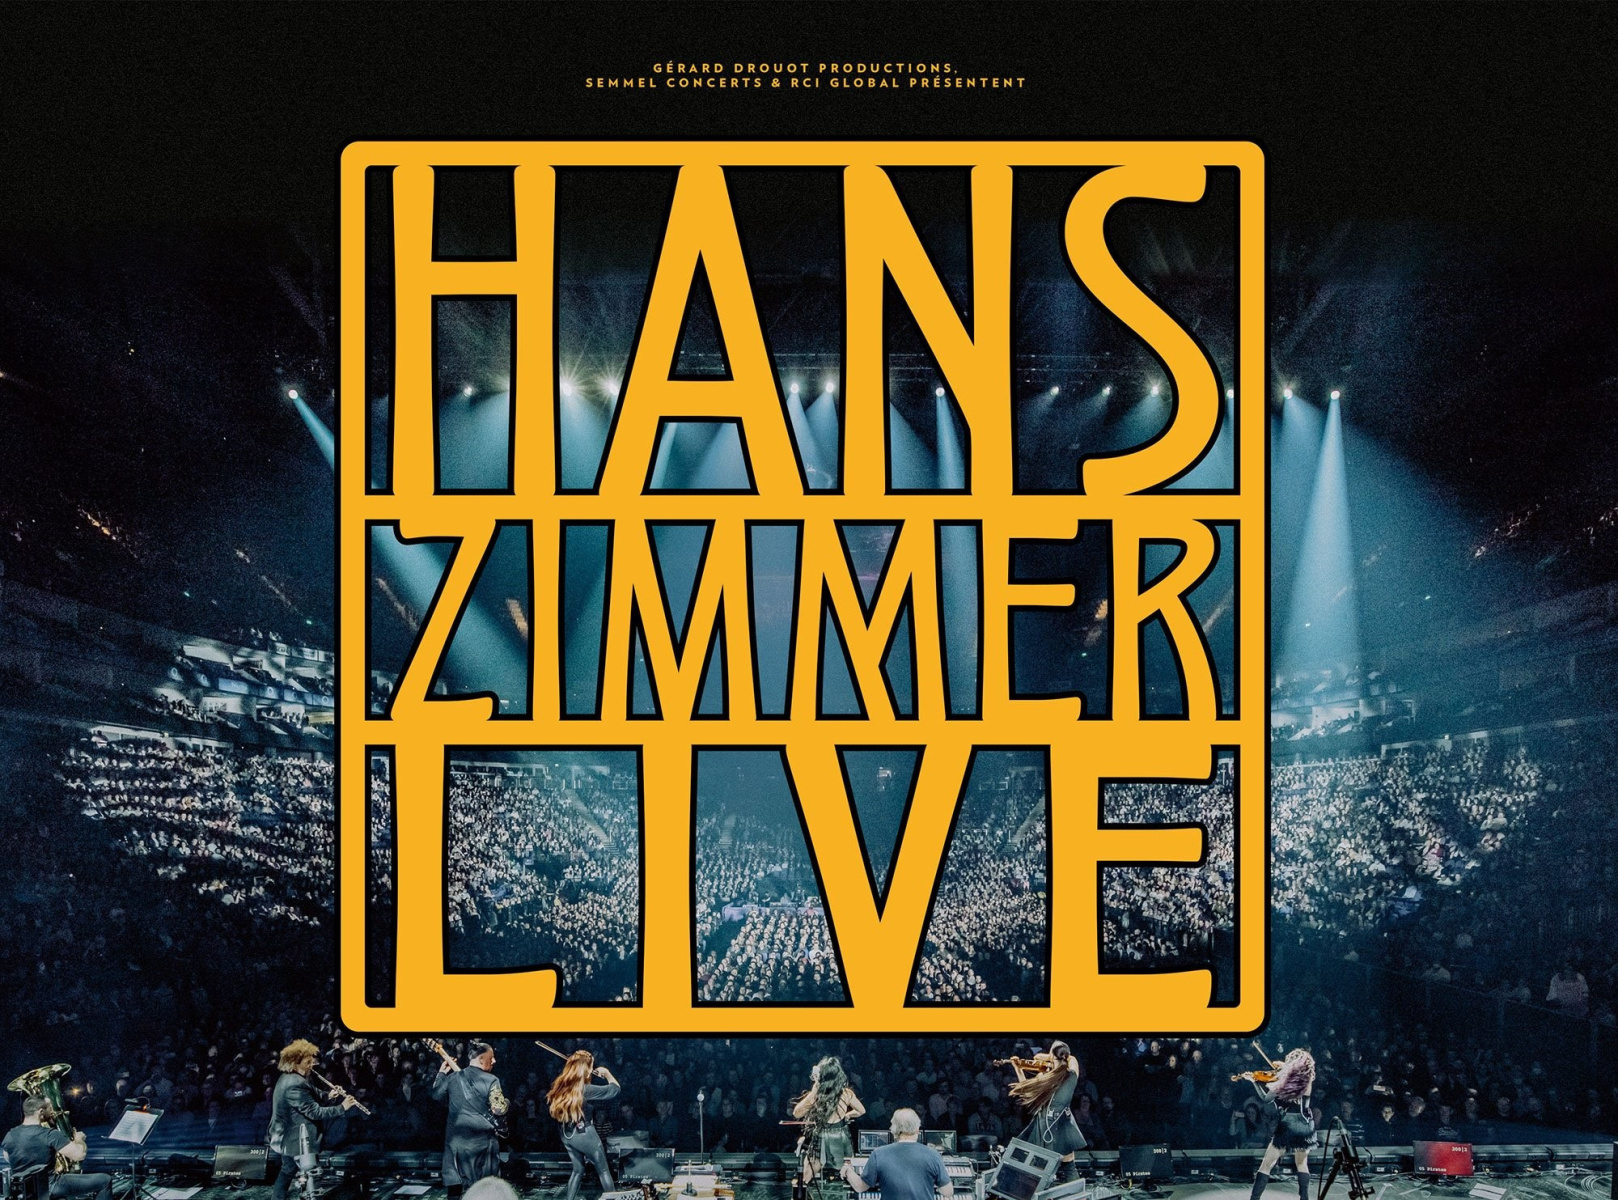 Hans Zimmer Concert Experience in 2025